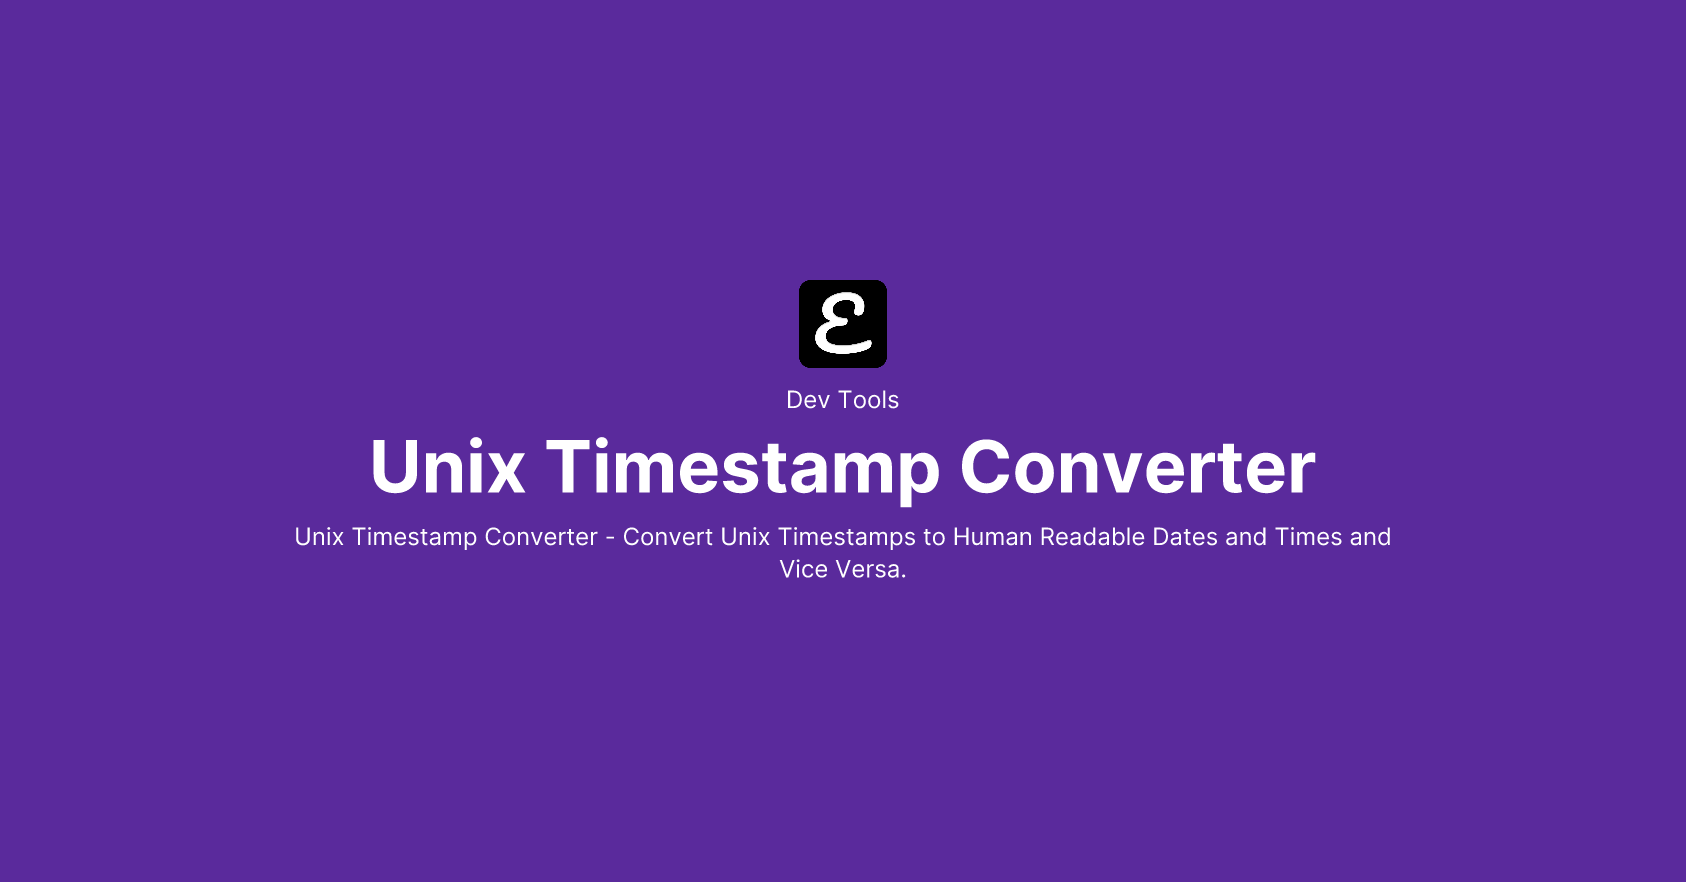 Unix Timestamp Converter by Eric David Smith